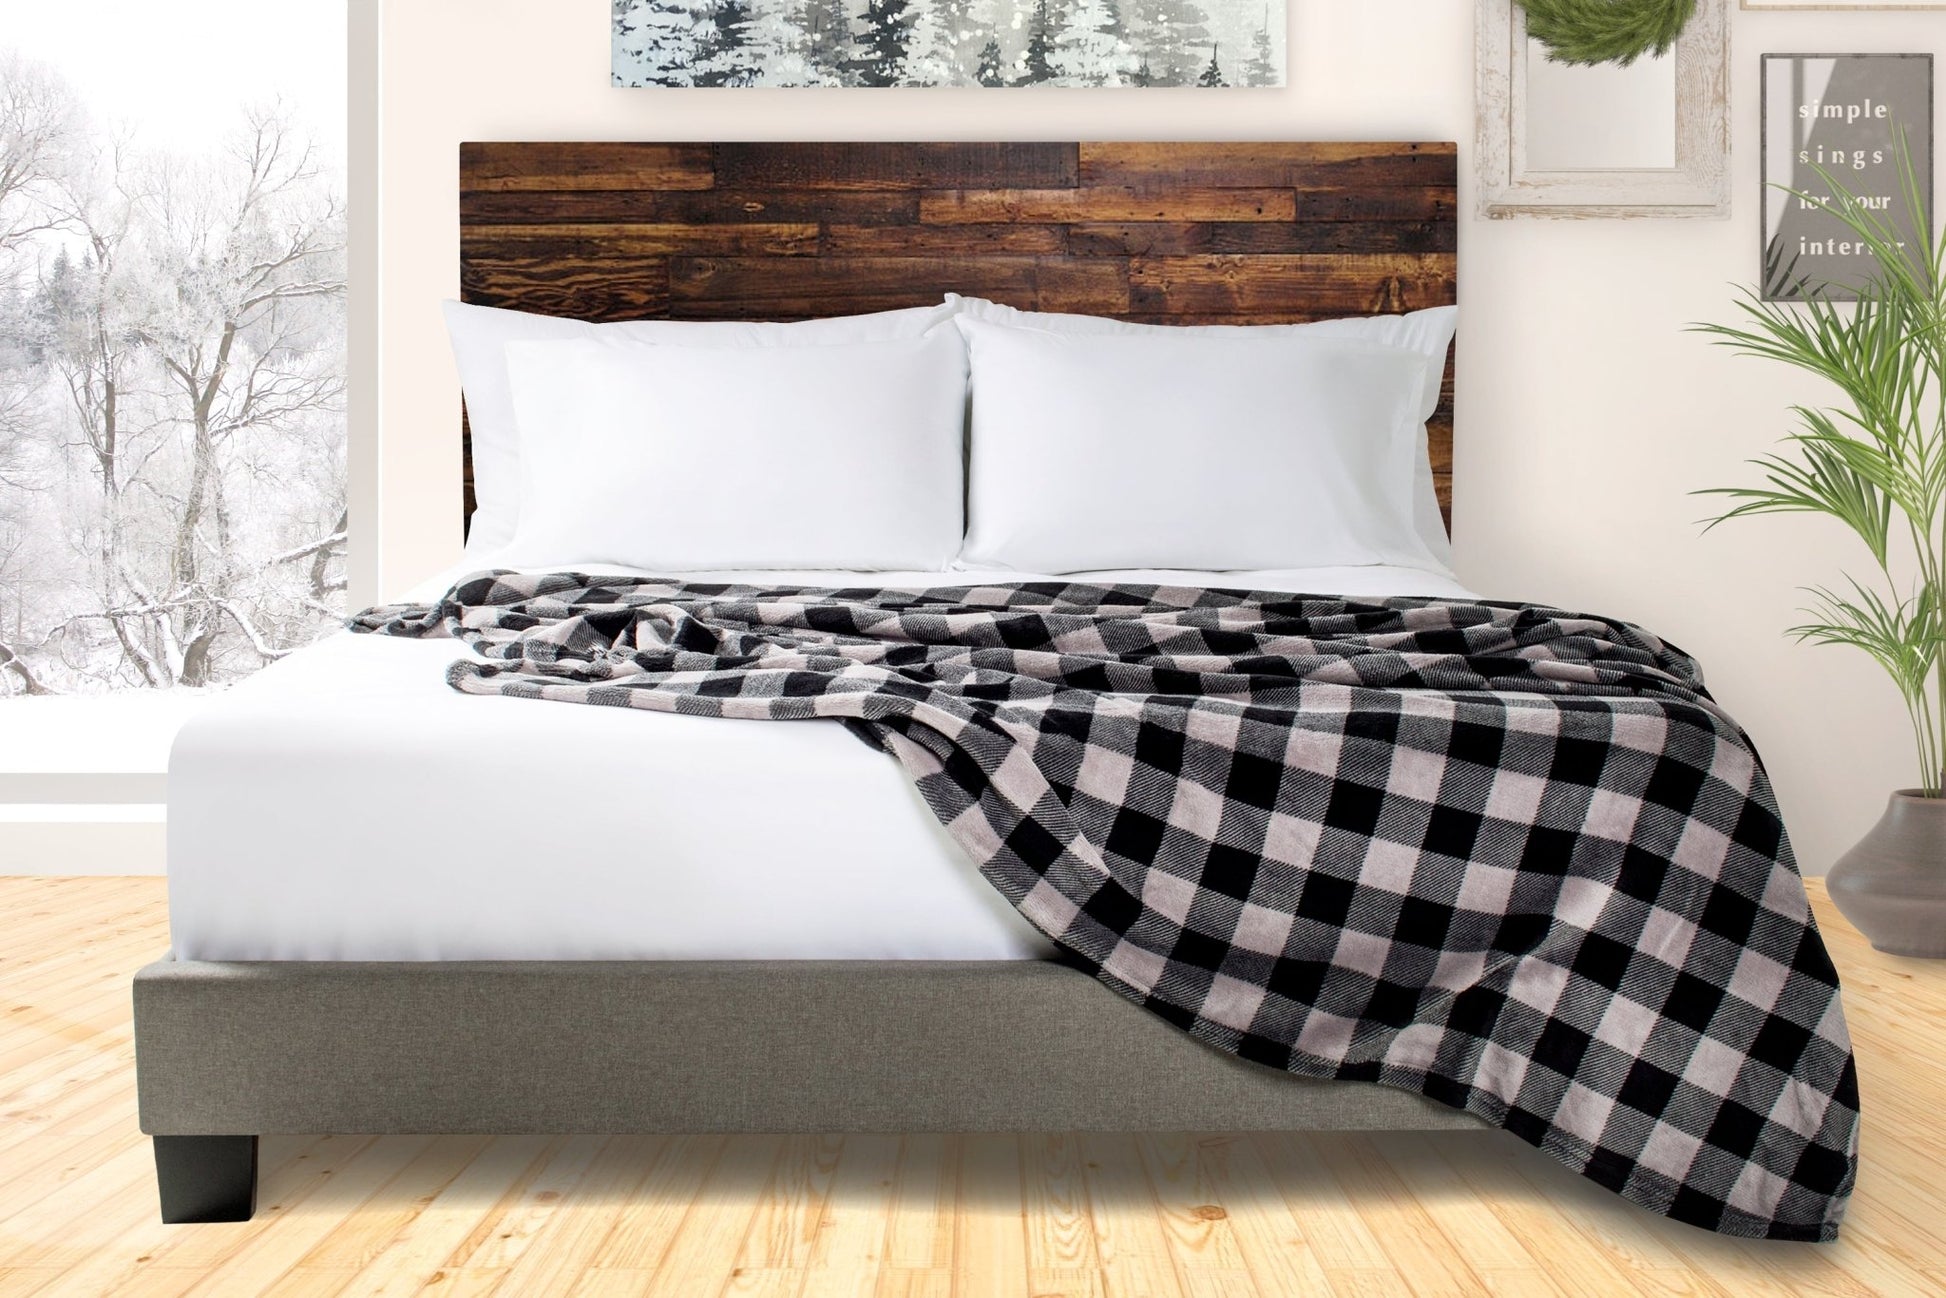 Super Soft Knit Blanket Throw Home Decor Bedding 60X80 Grey - DecoElegance - Blanket Throw Home Bedding